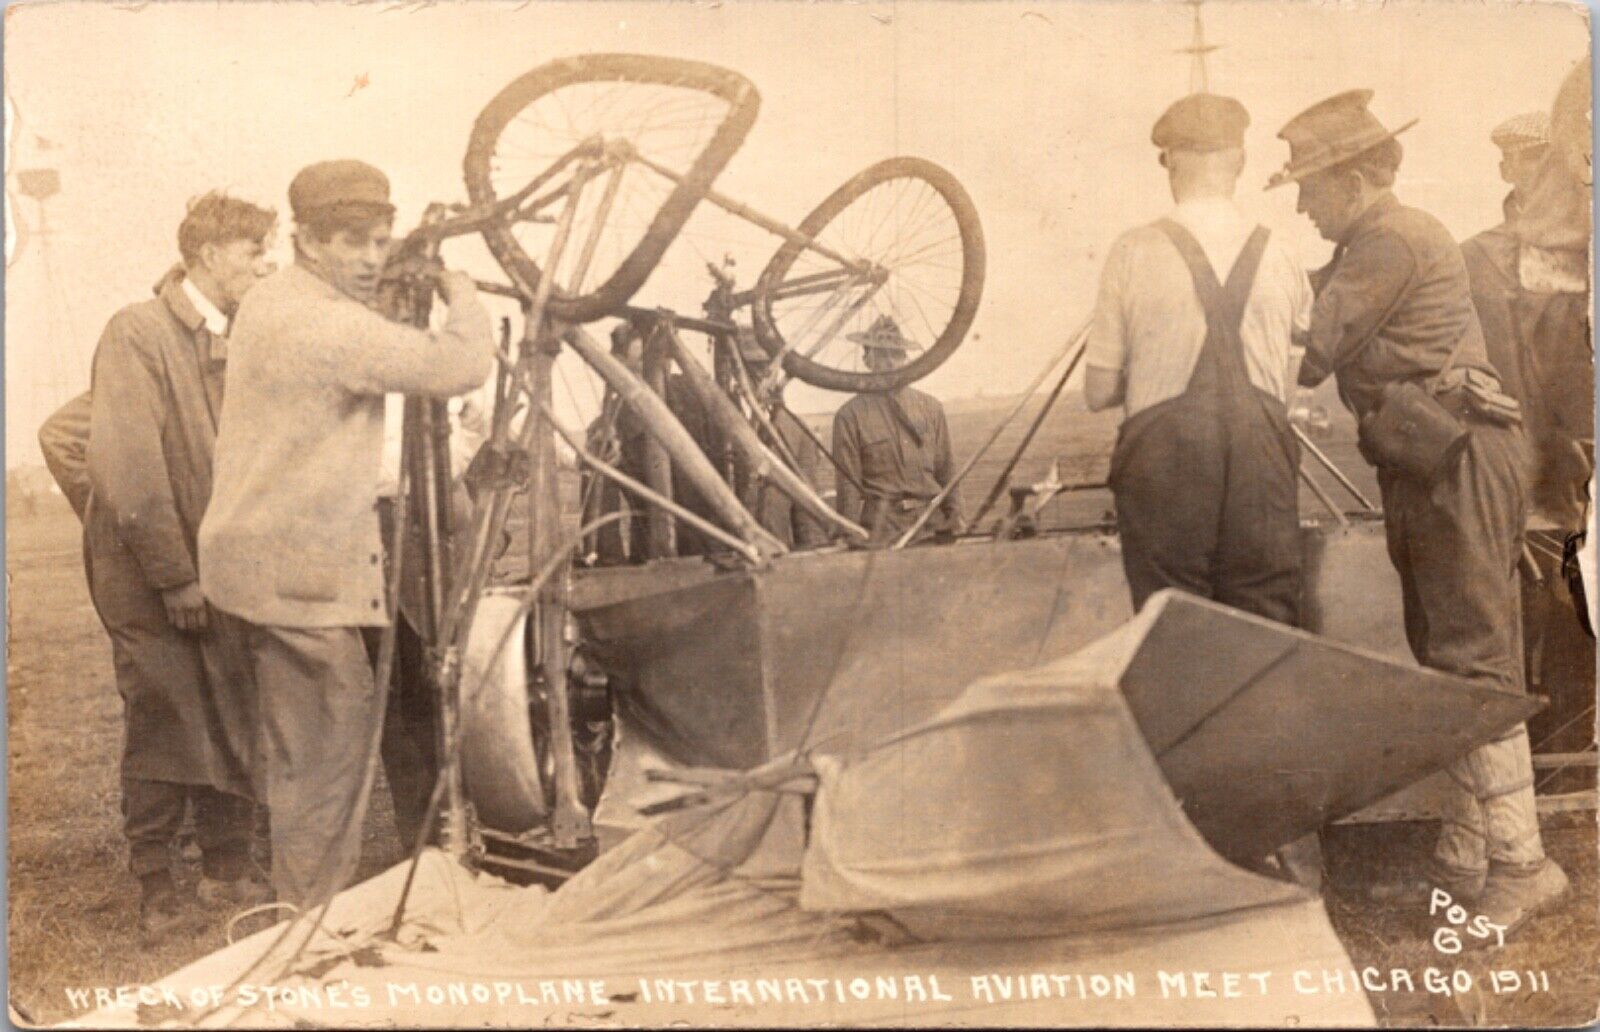 1911 Wreck Arthur Burr “Wizard” Stone Monoplane Aviation Meet Chicago Illinois